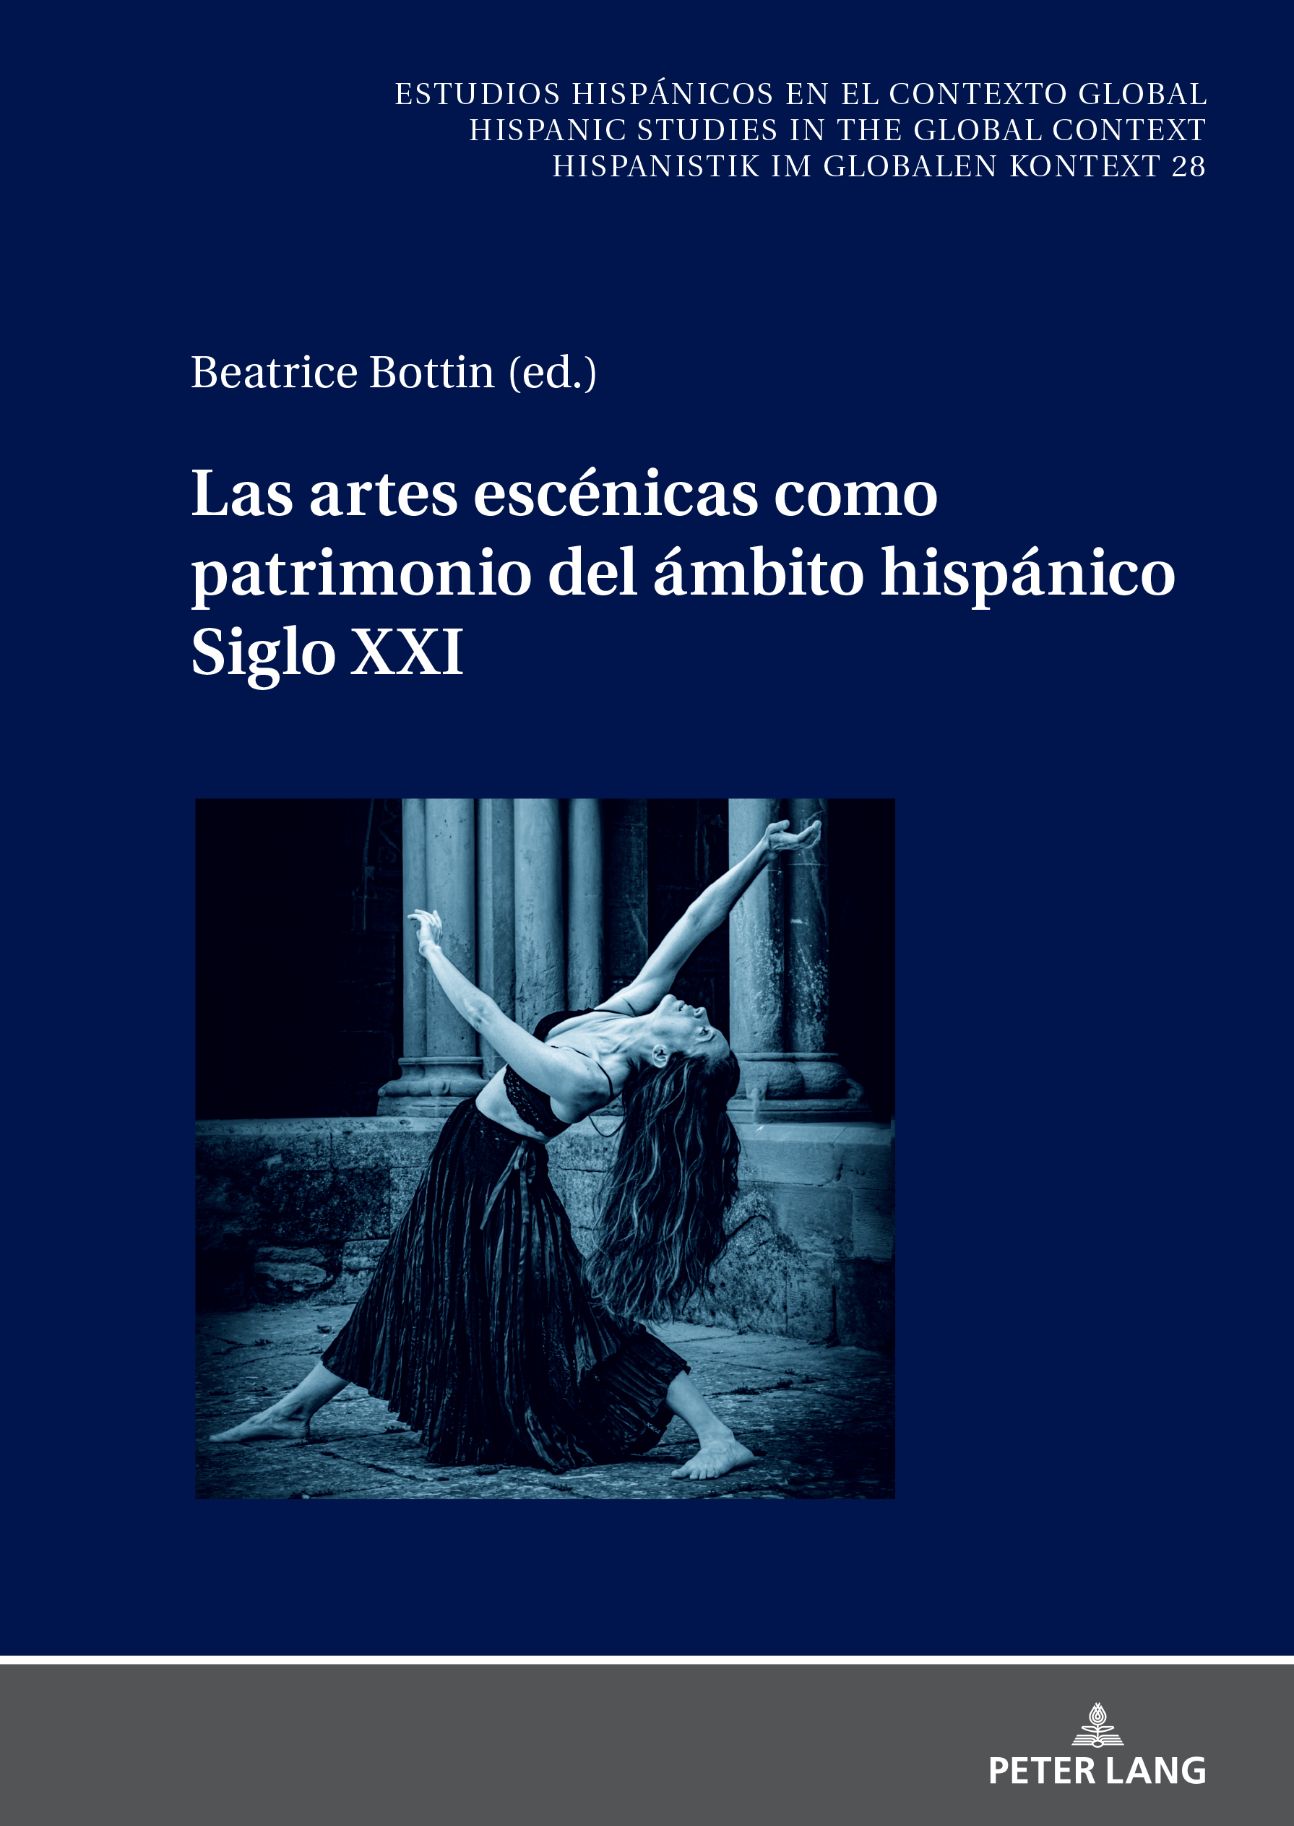 Beatrice Bottin (dir.), Las artes escénicas como patrimonio del ámbito hispánico. Siglo XXI